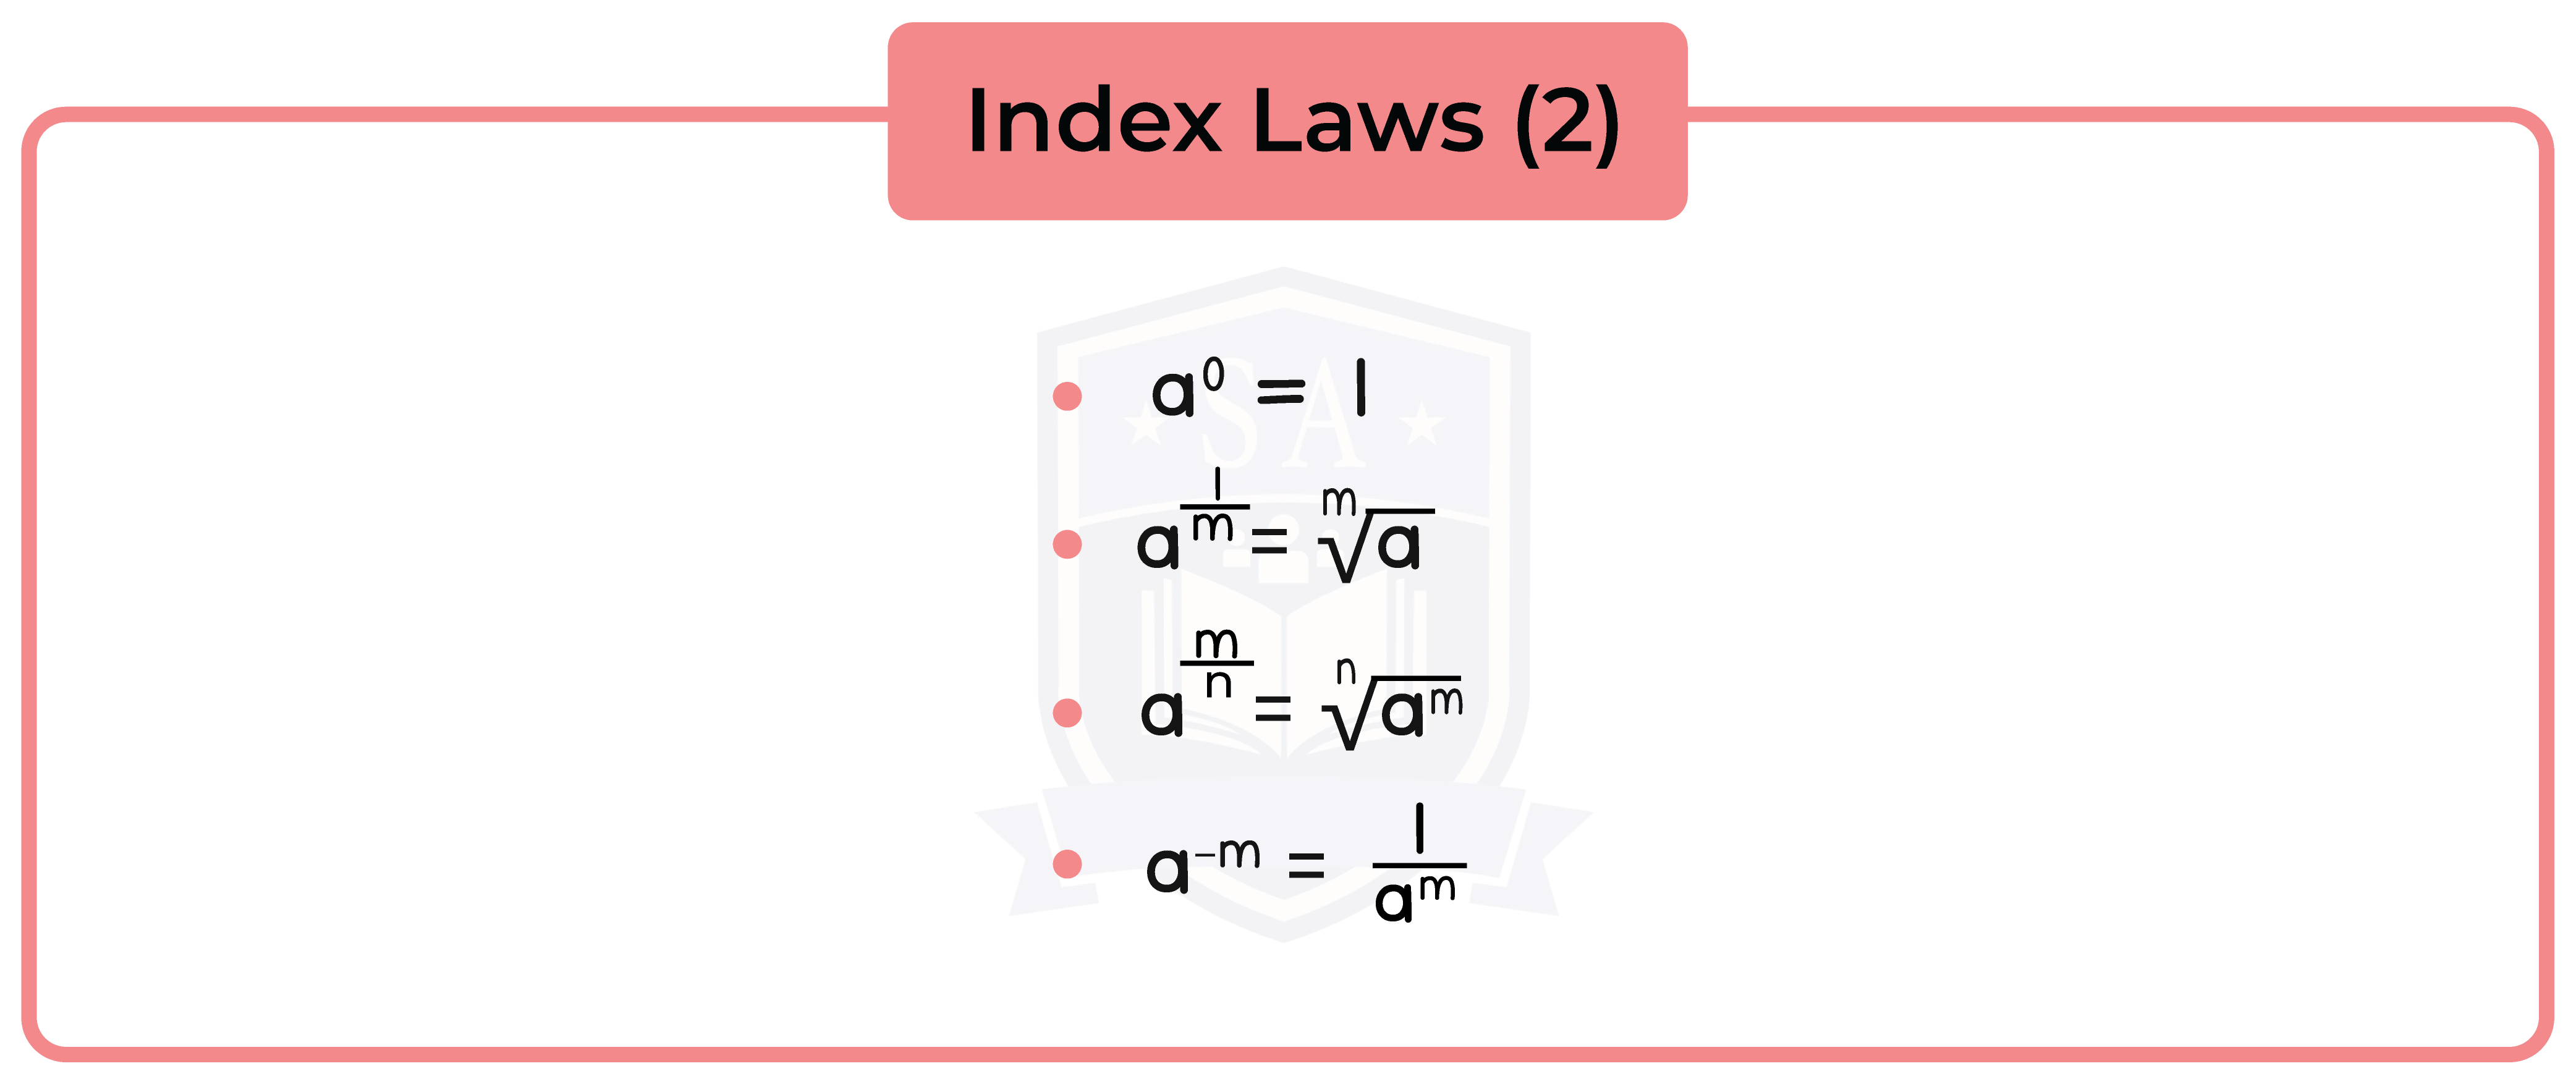 edexcel_igcse_mathematics a_topic 12_use of symbols_003_continuation of index laws